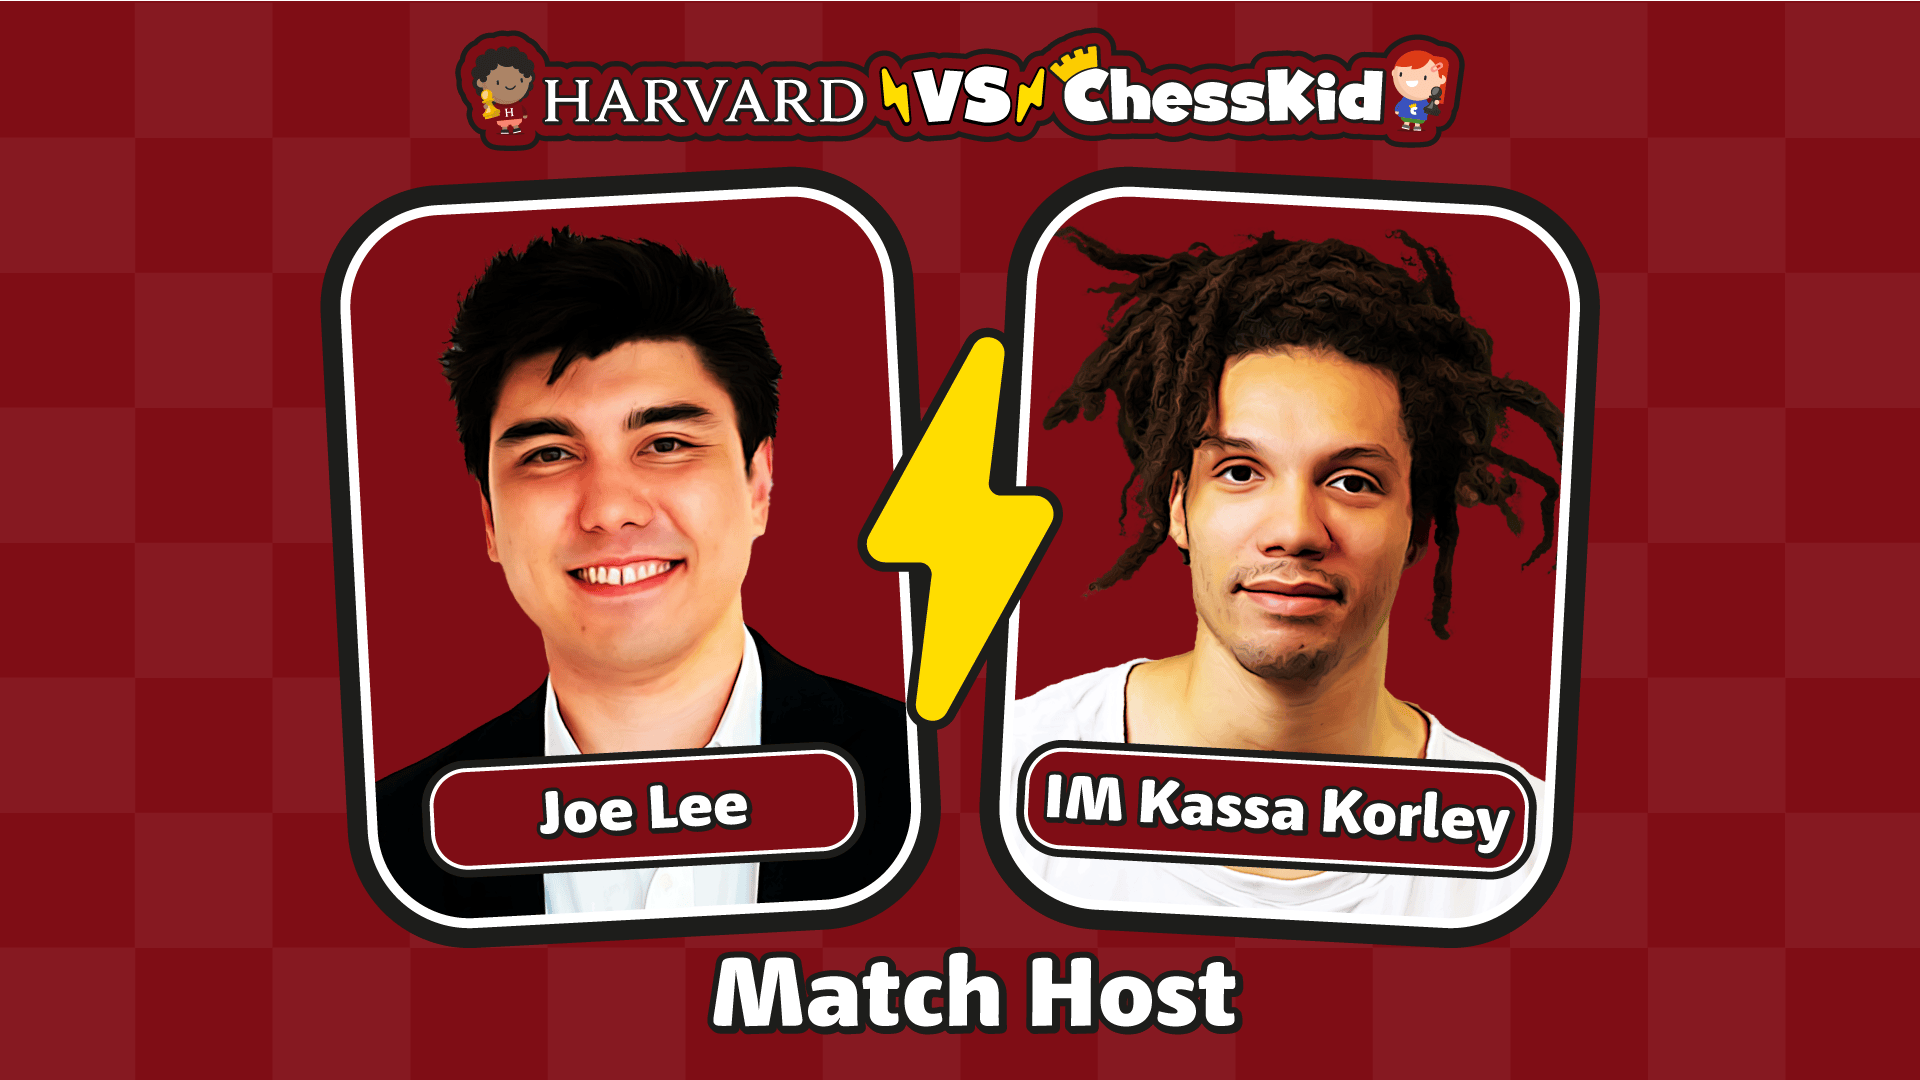 ChessKid Stars Defeat Harvard 